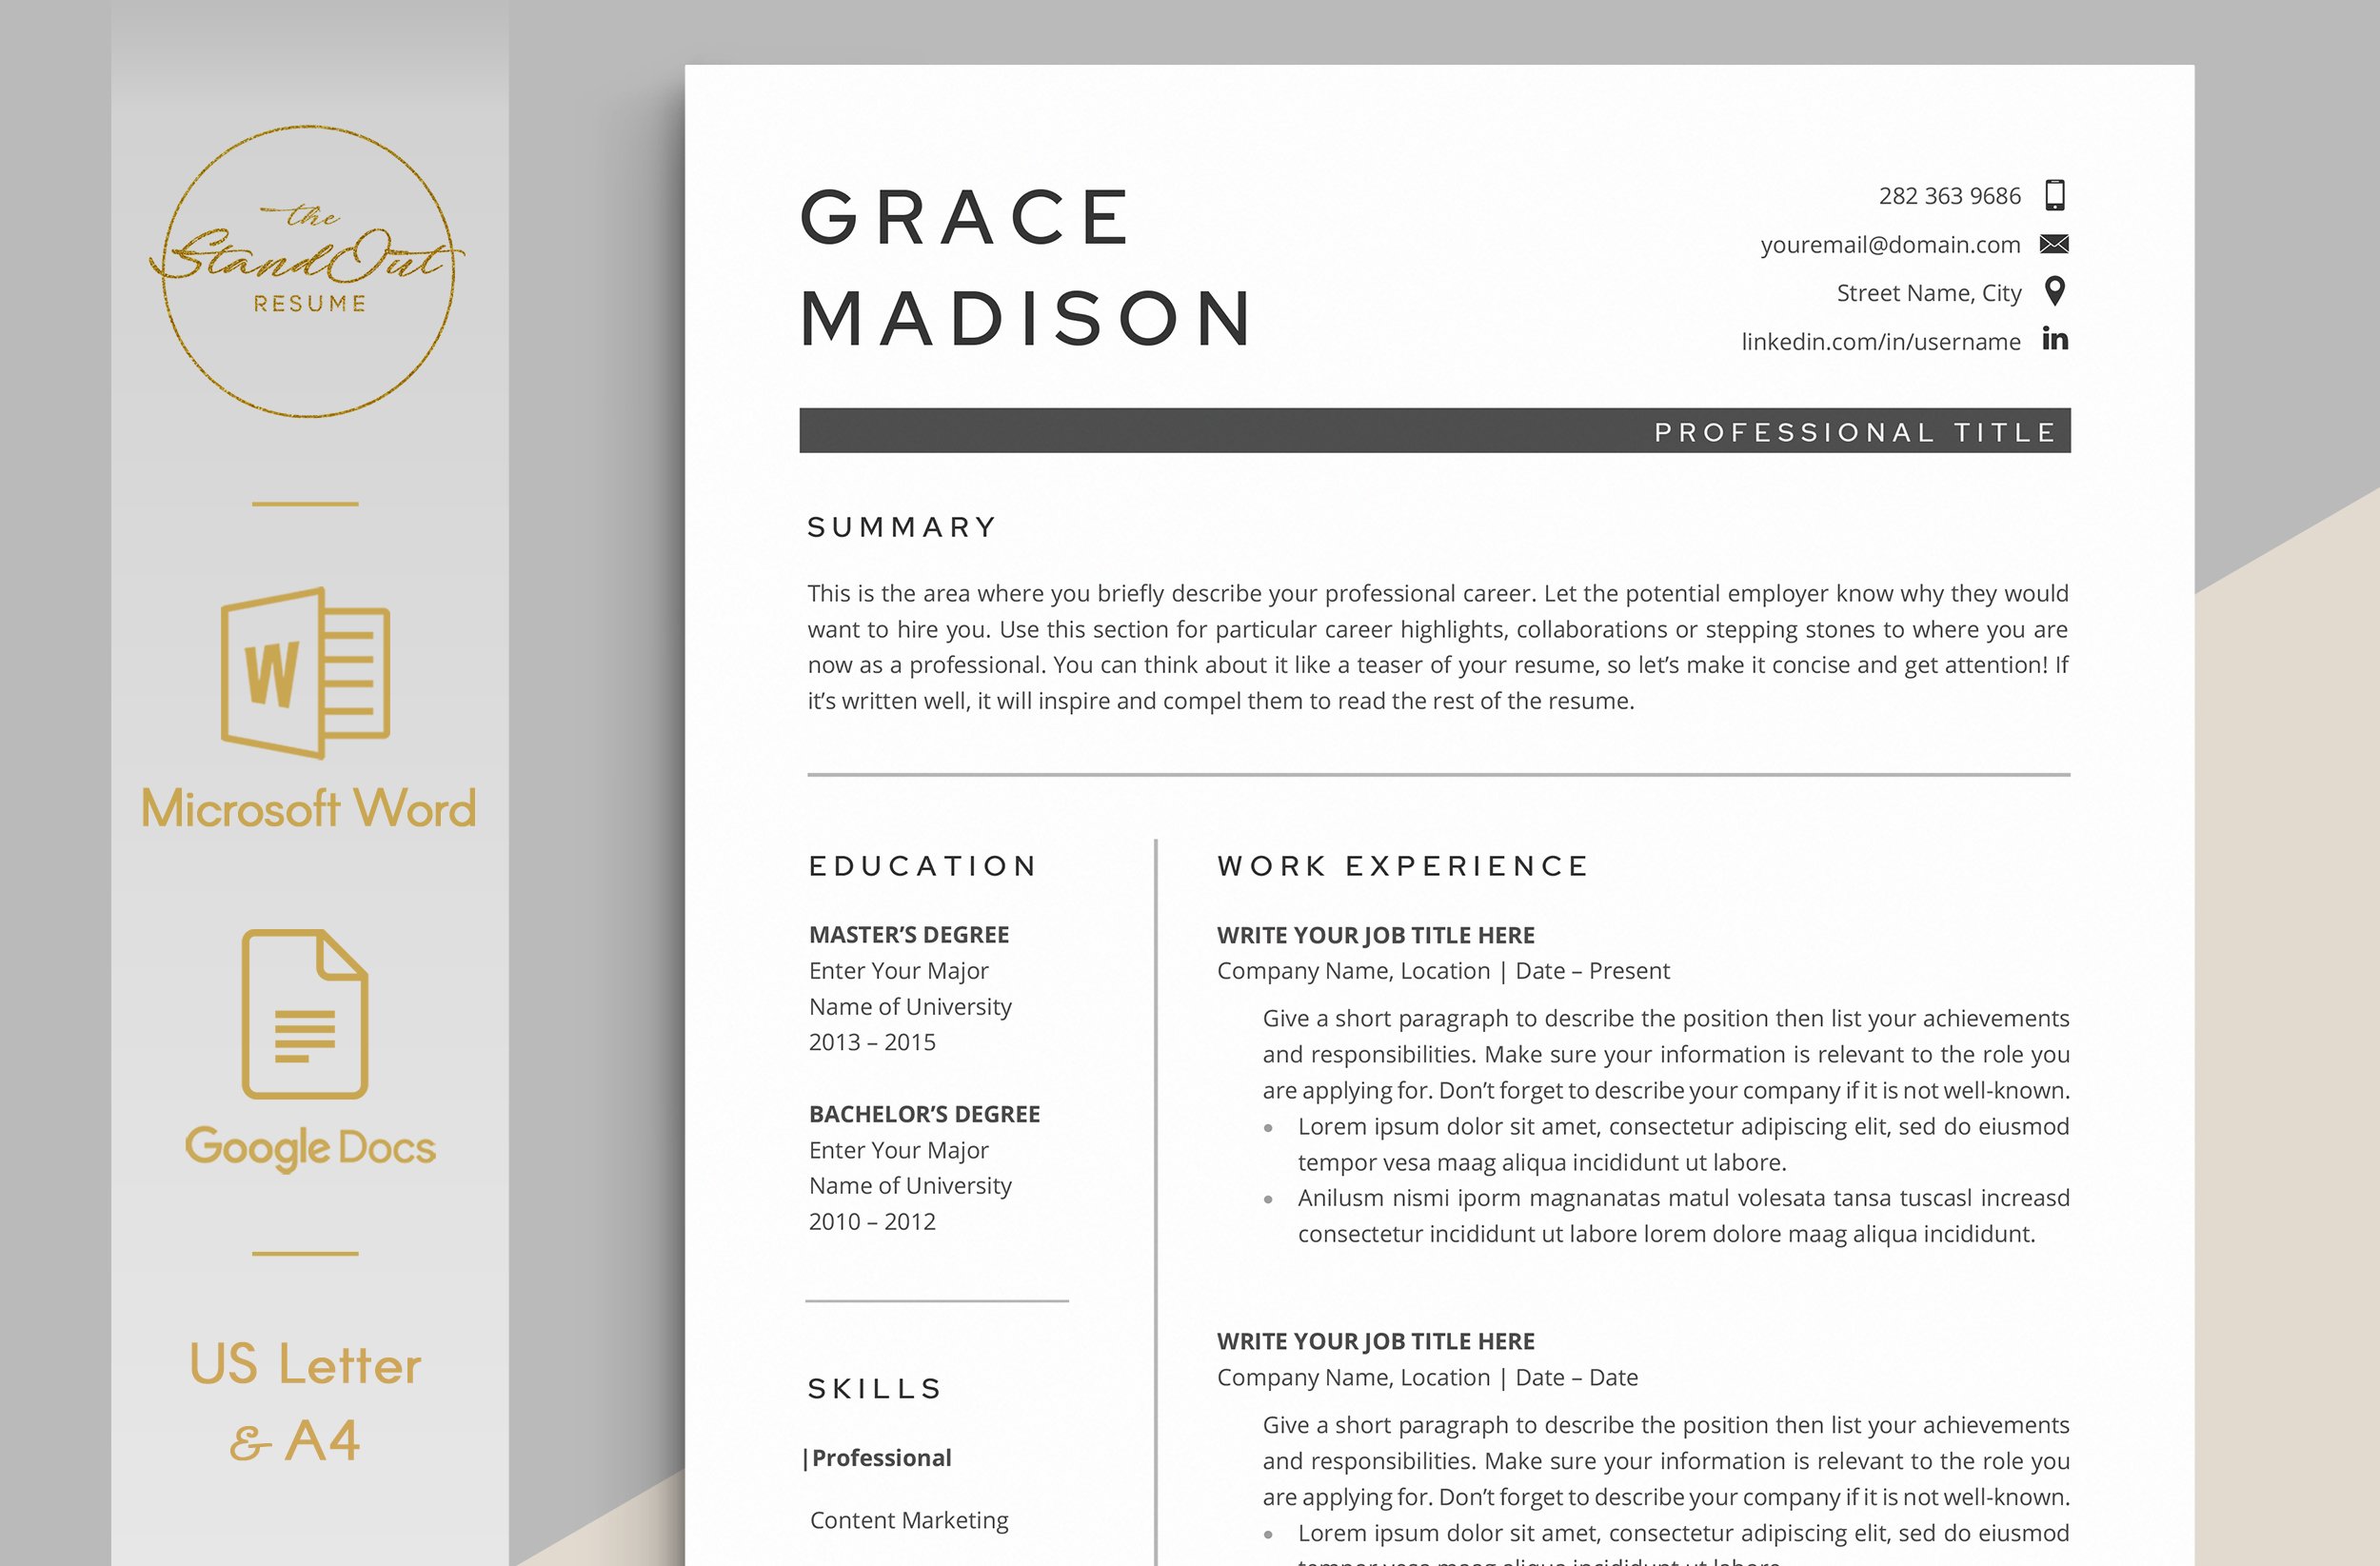 Resume/CV Template - GRACE cover image.